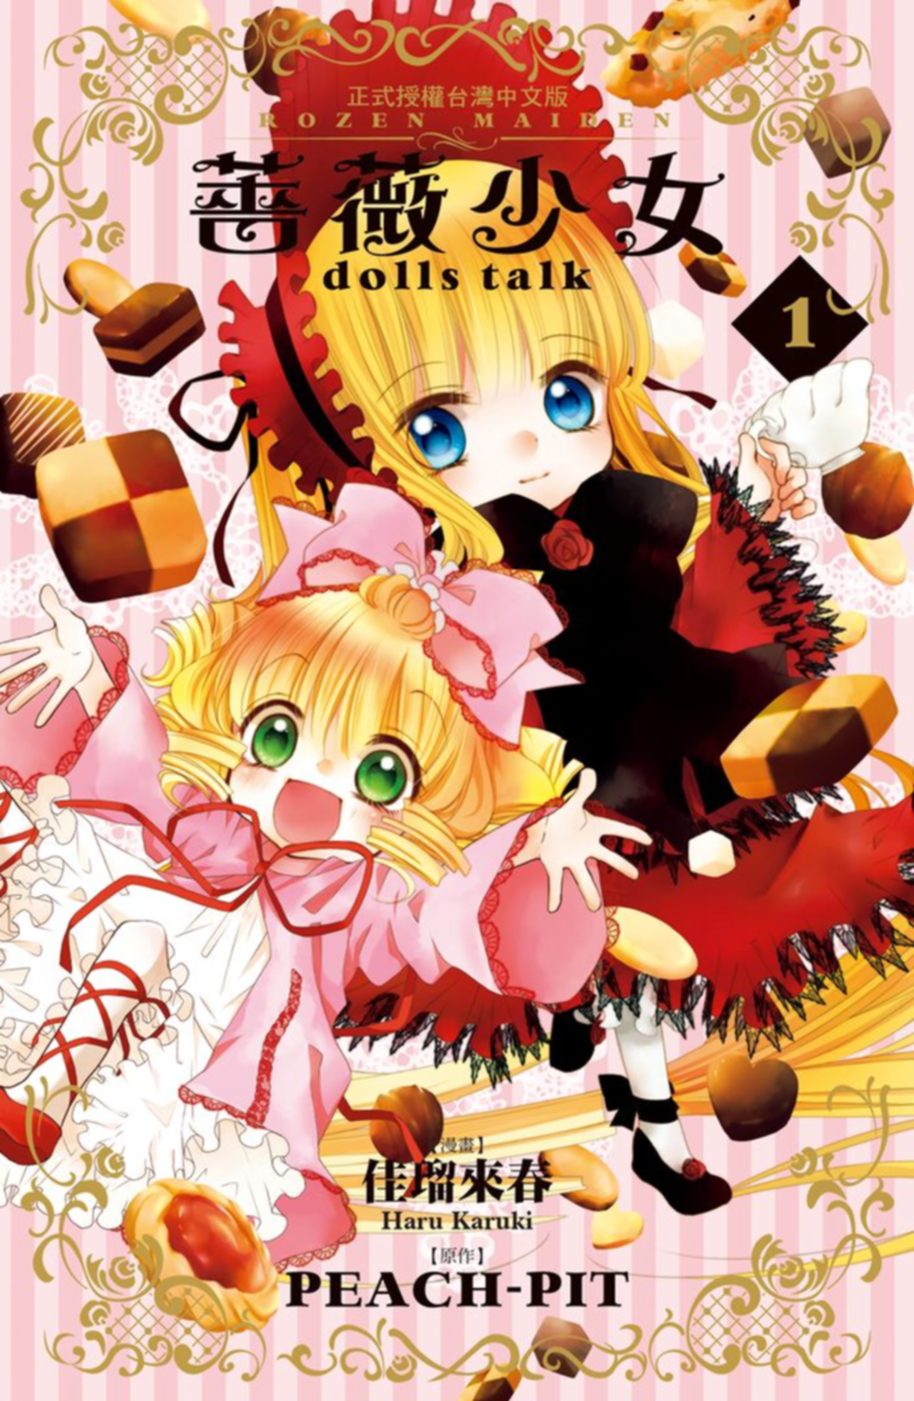 薔薇少女 dolls talk 1